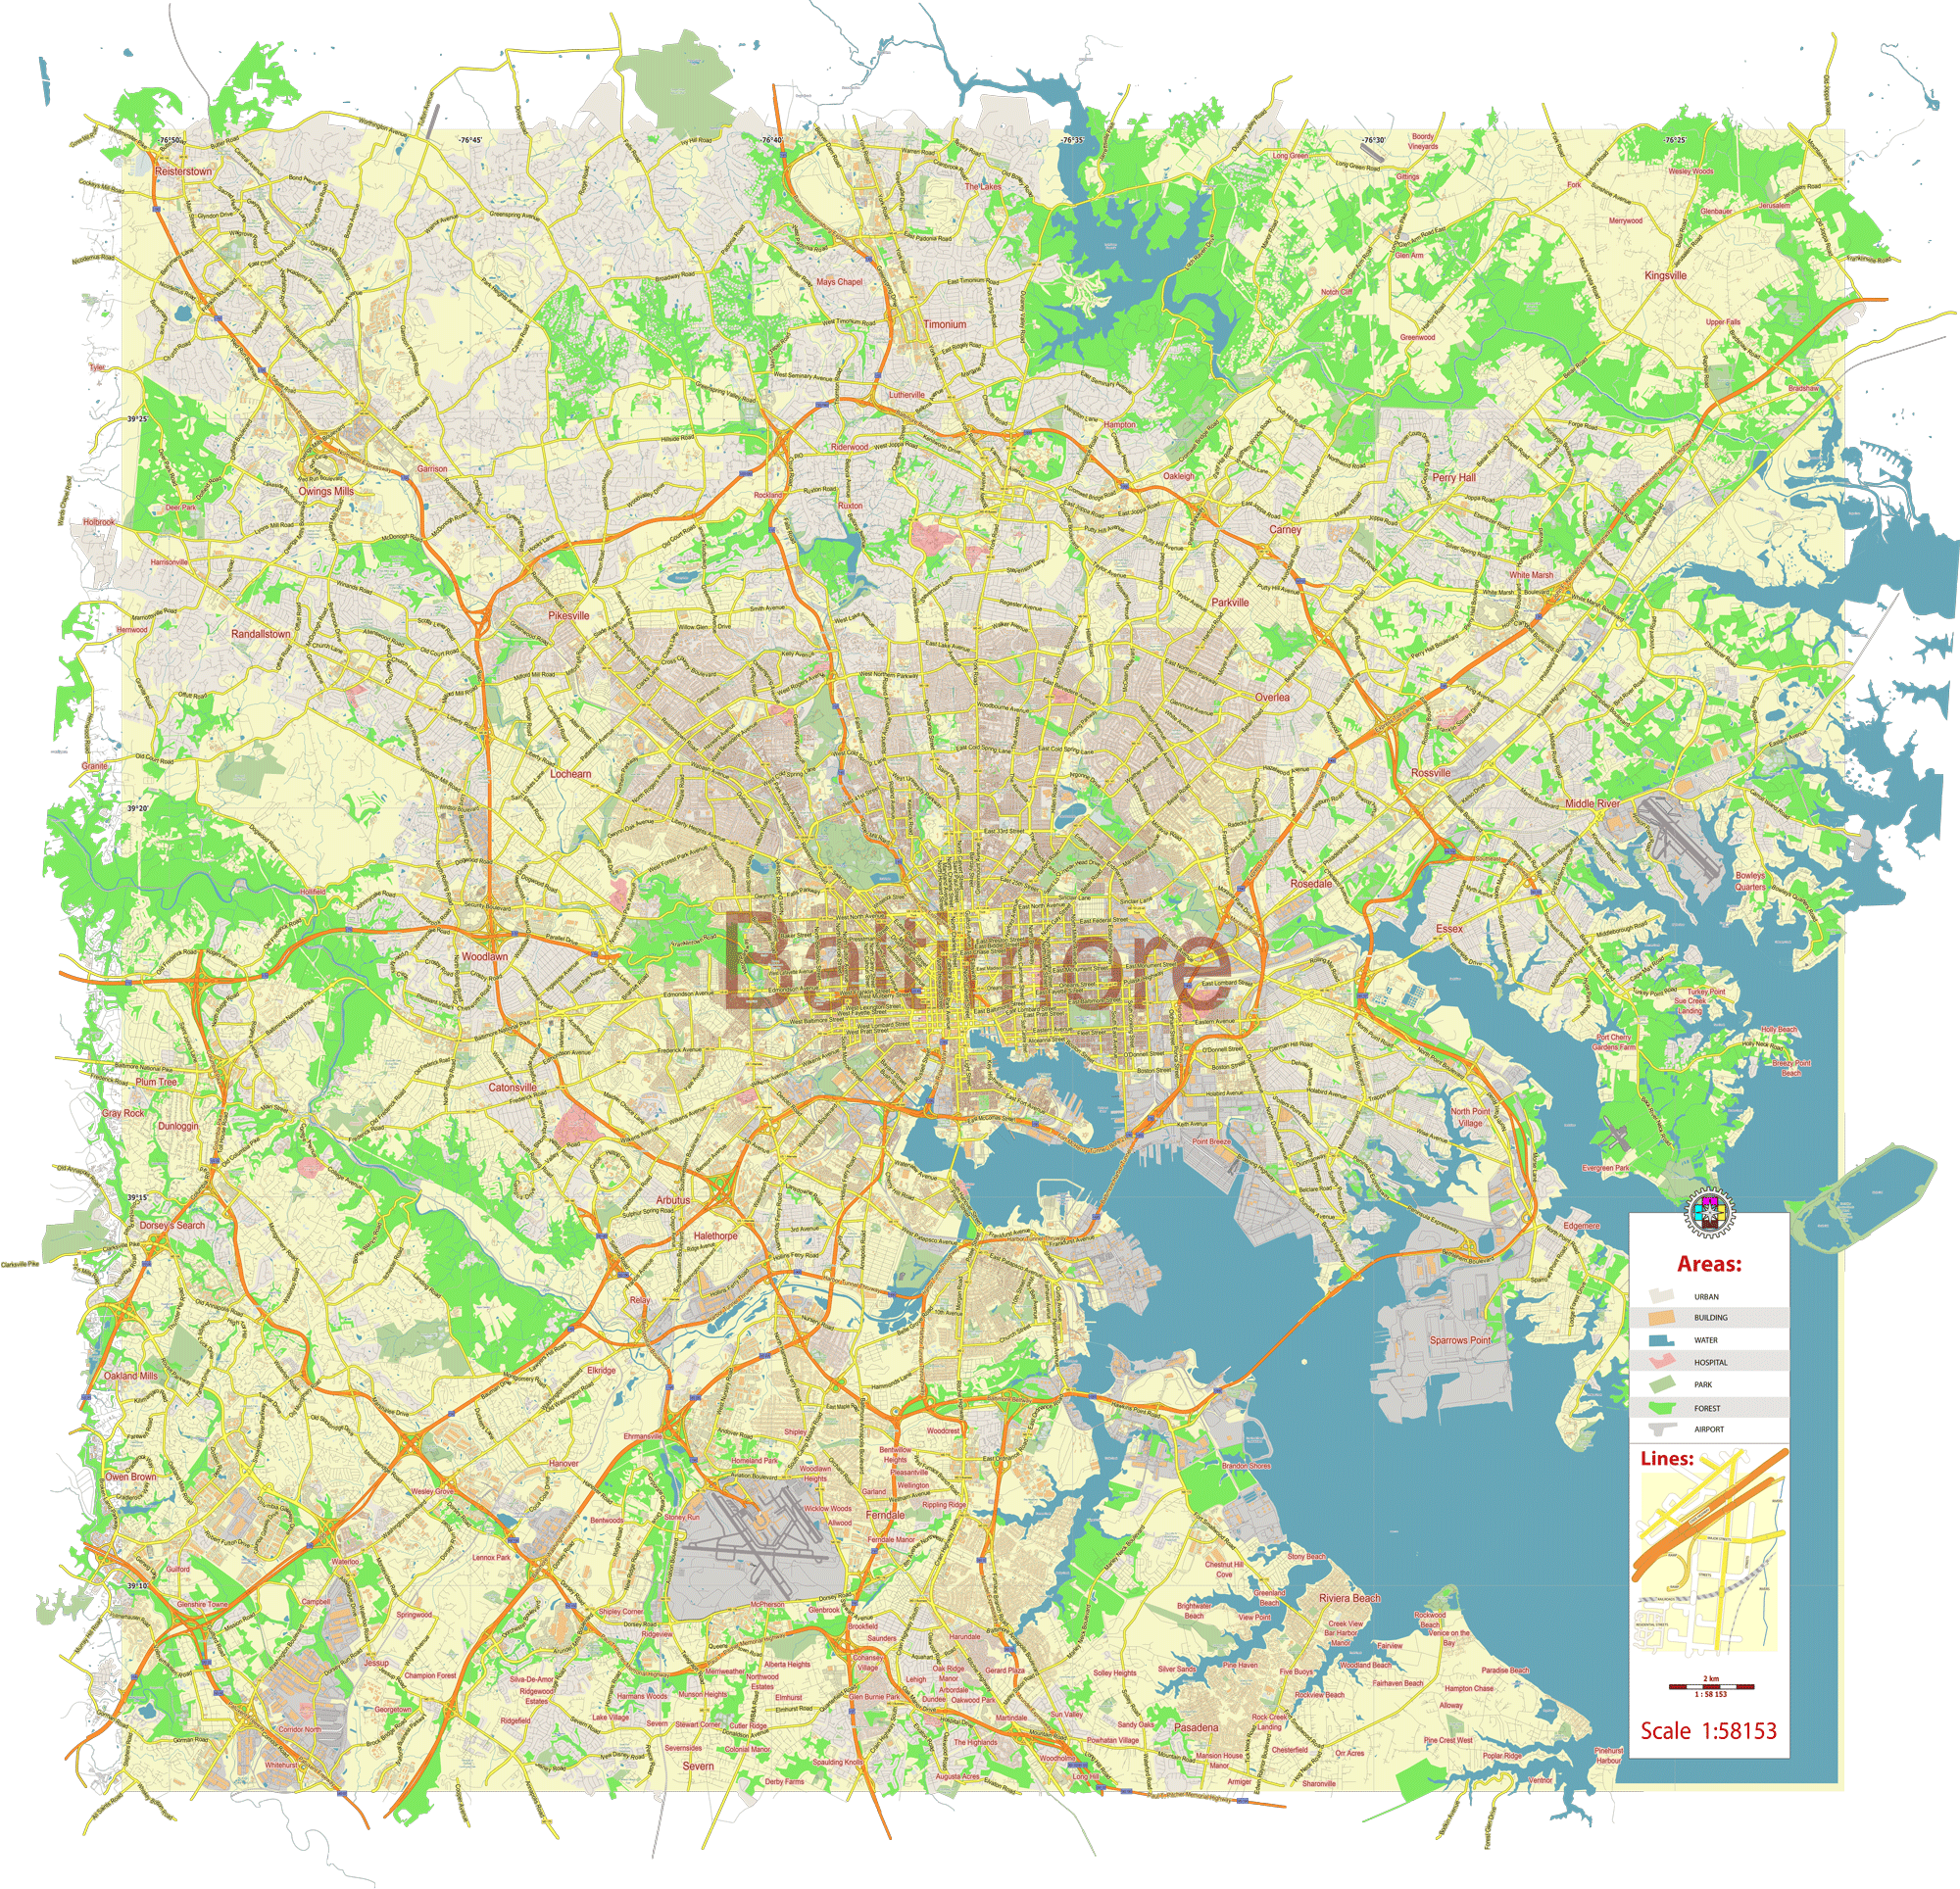 Baltimore Maryland US printable editable PDF layered Vector Map https